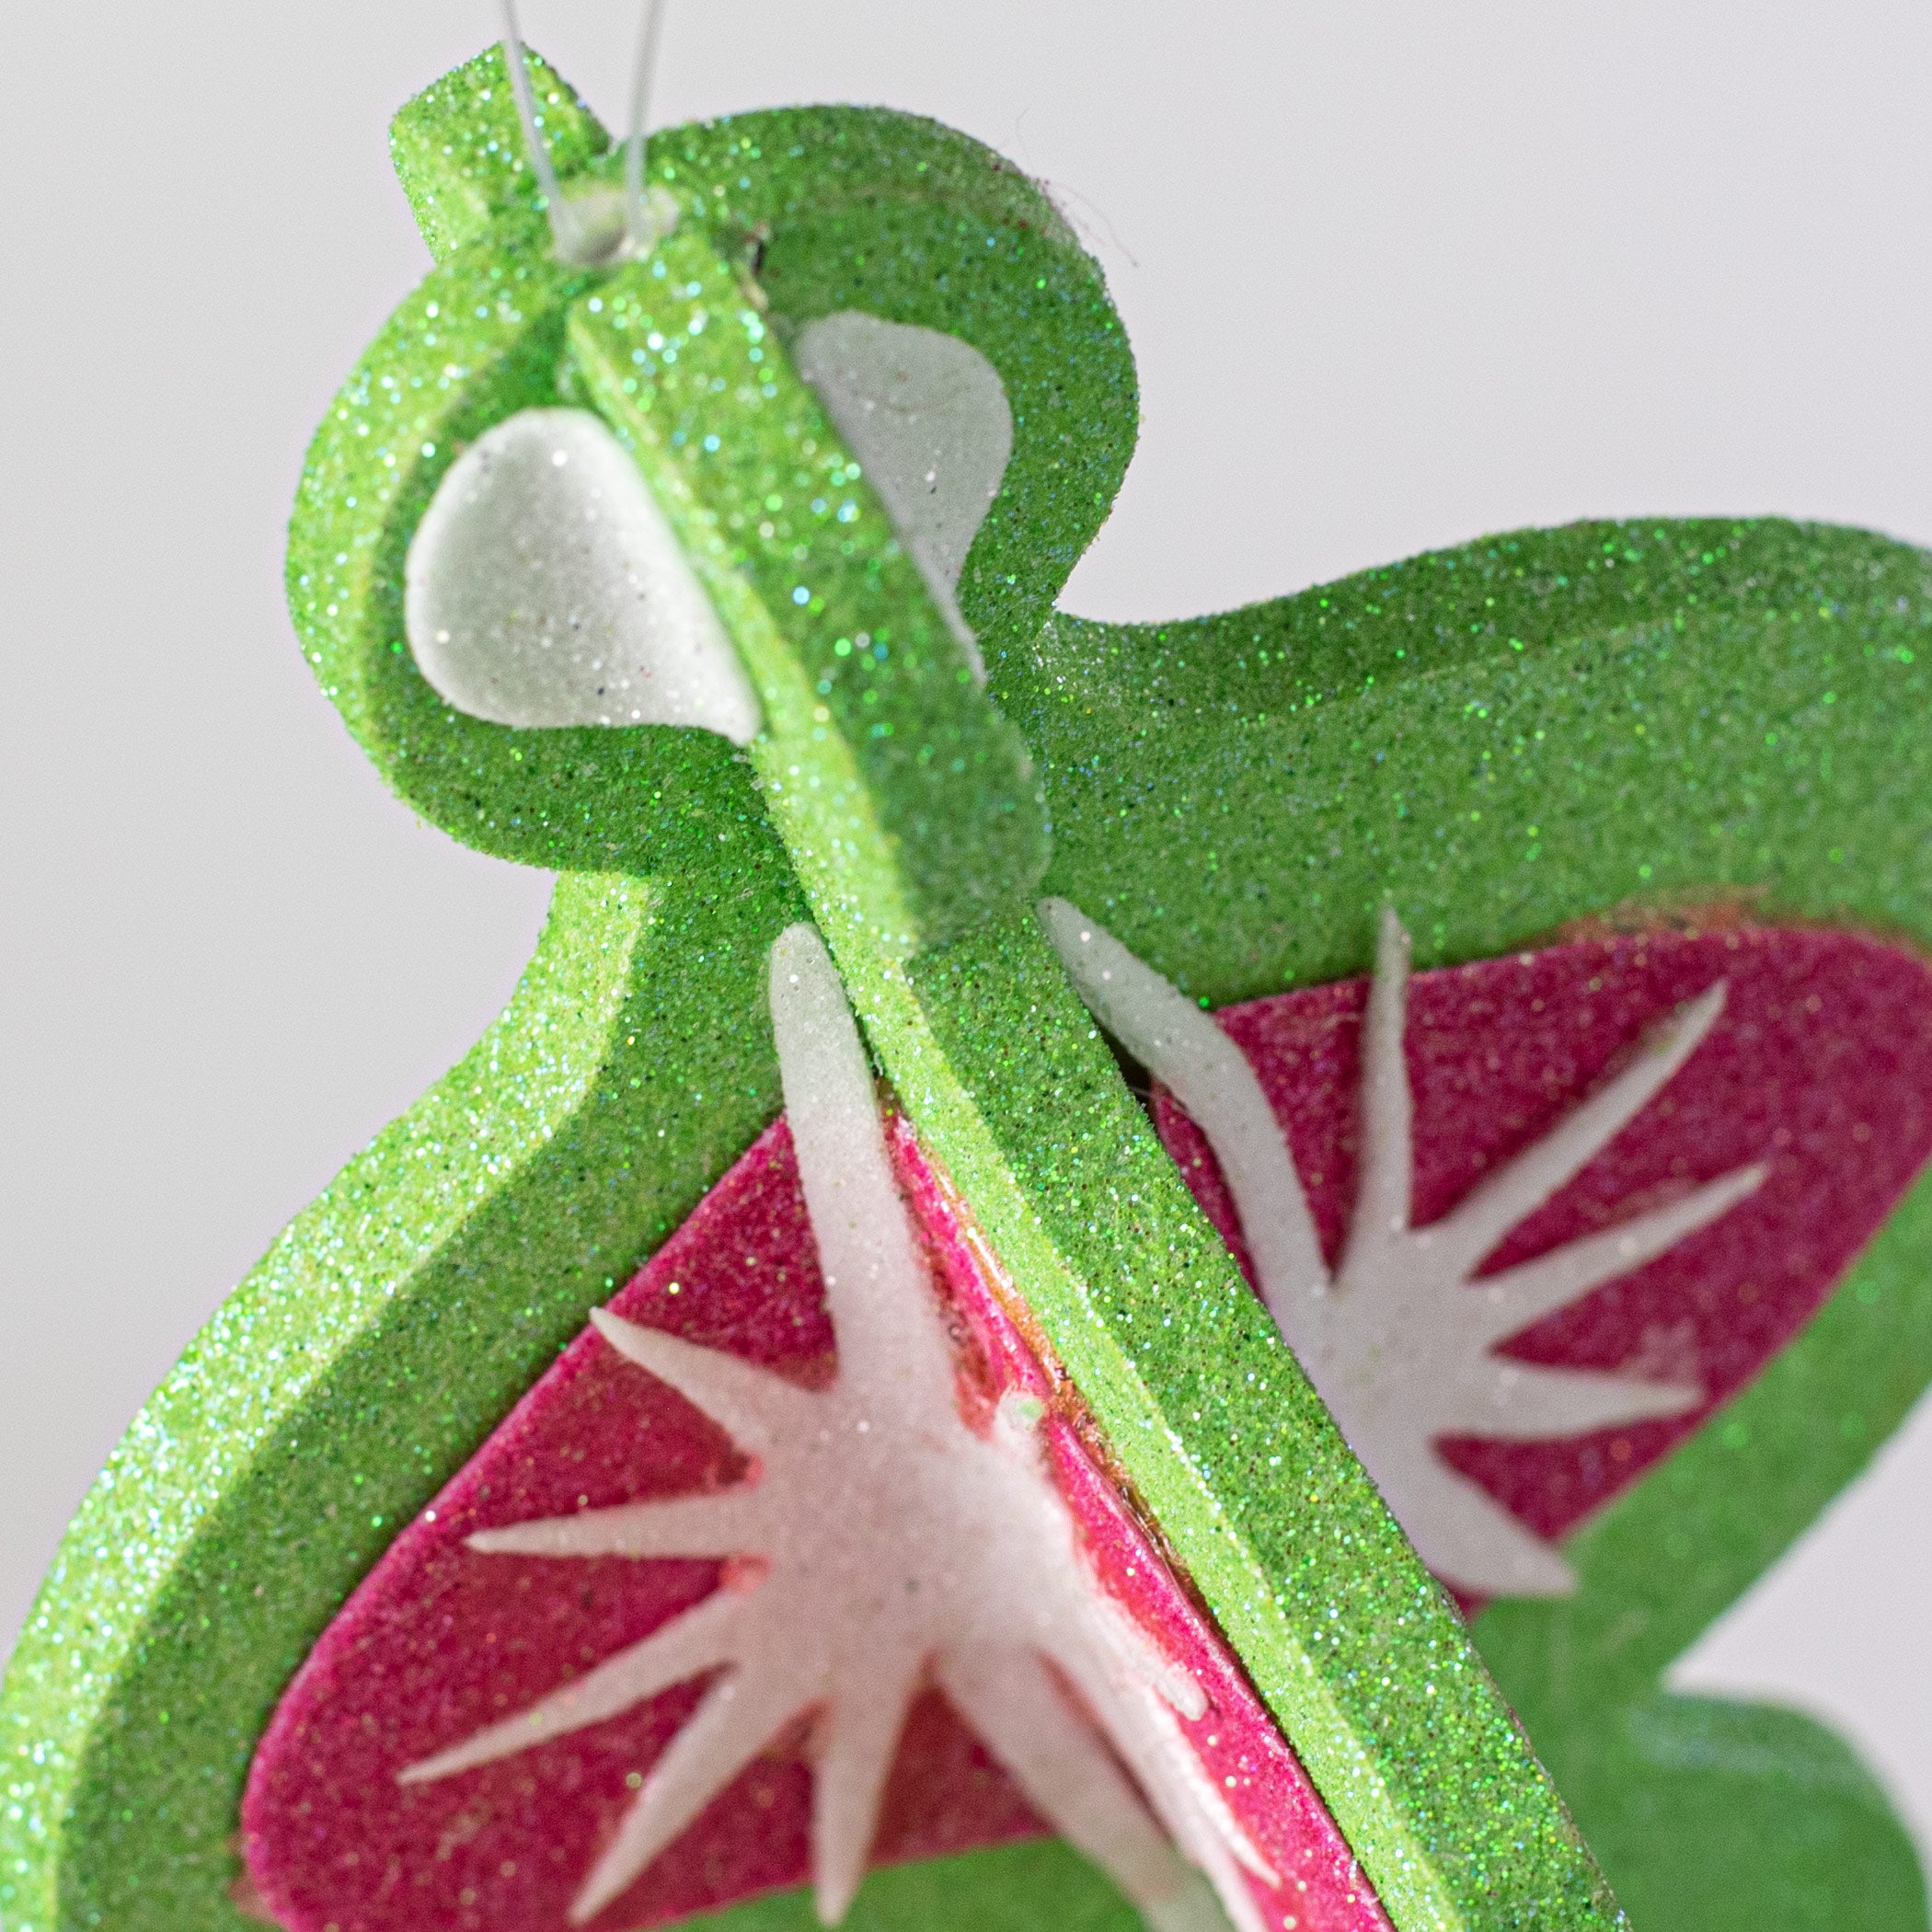 10" Whimsical Lantern Ornament: Green